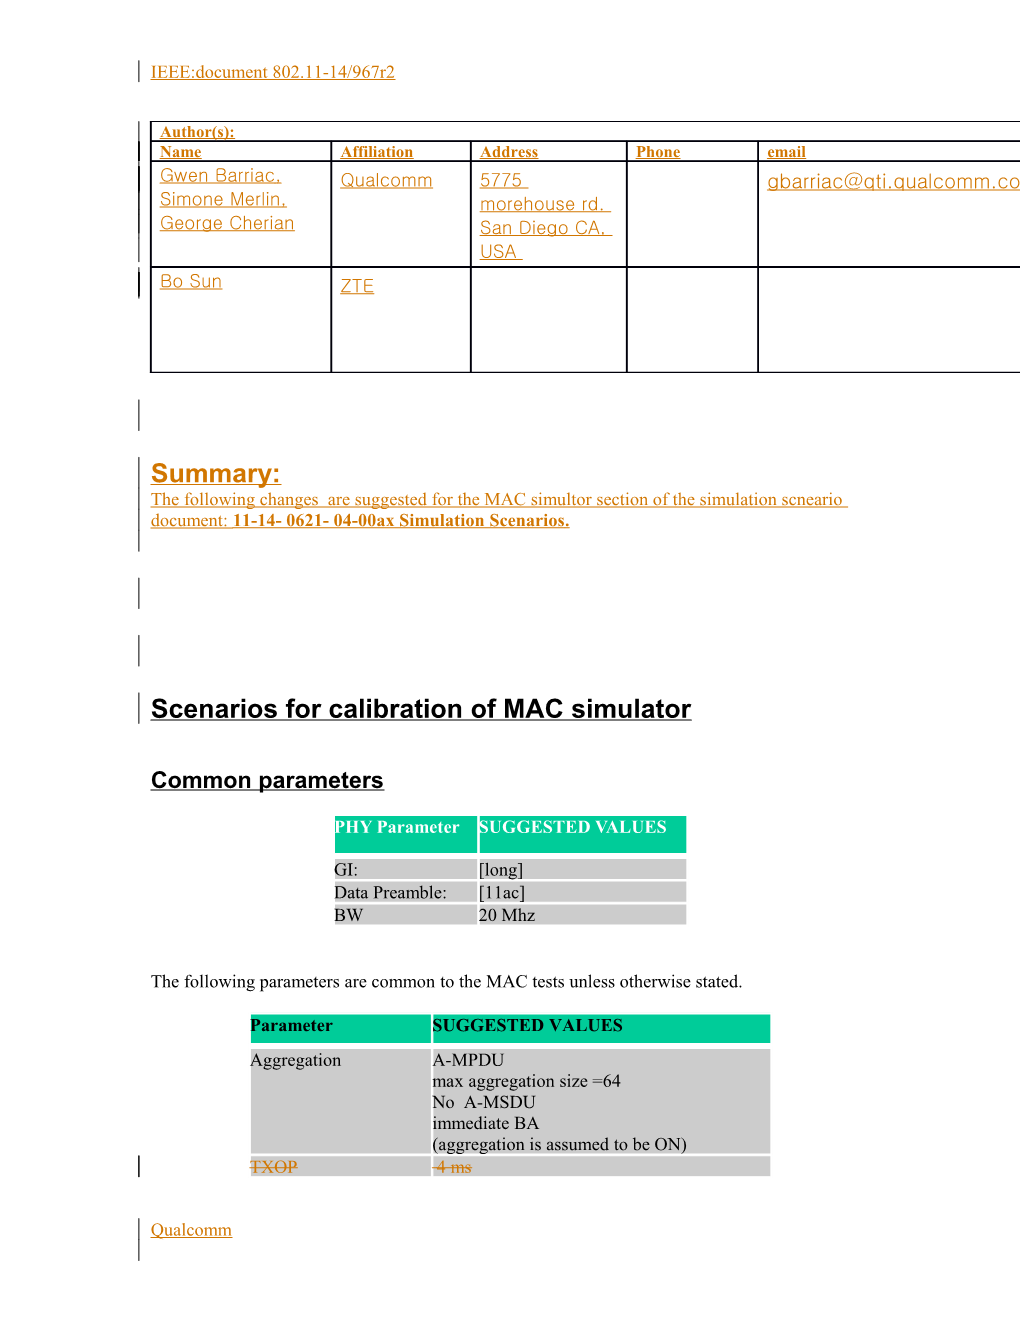 Scenarios for Calibration of MAC Simulator